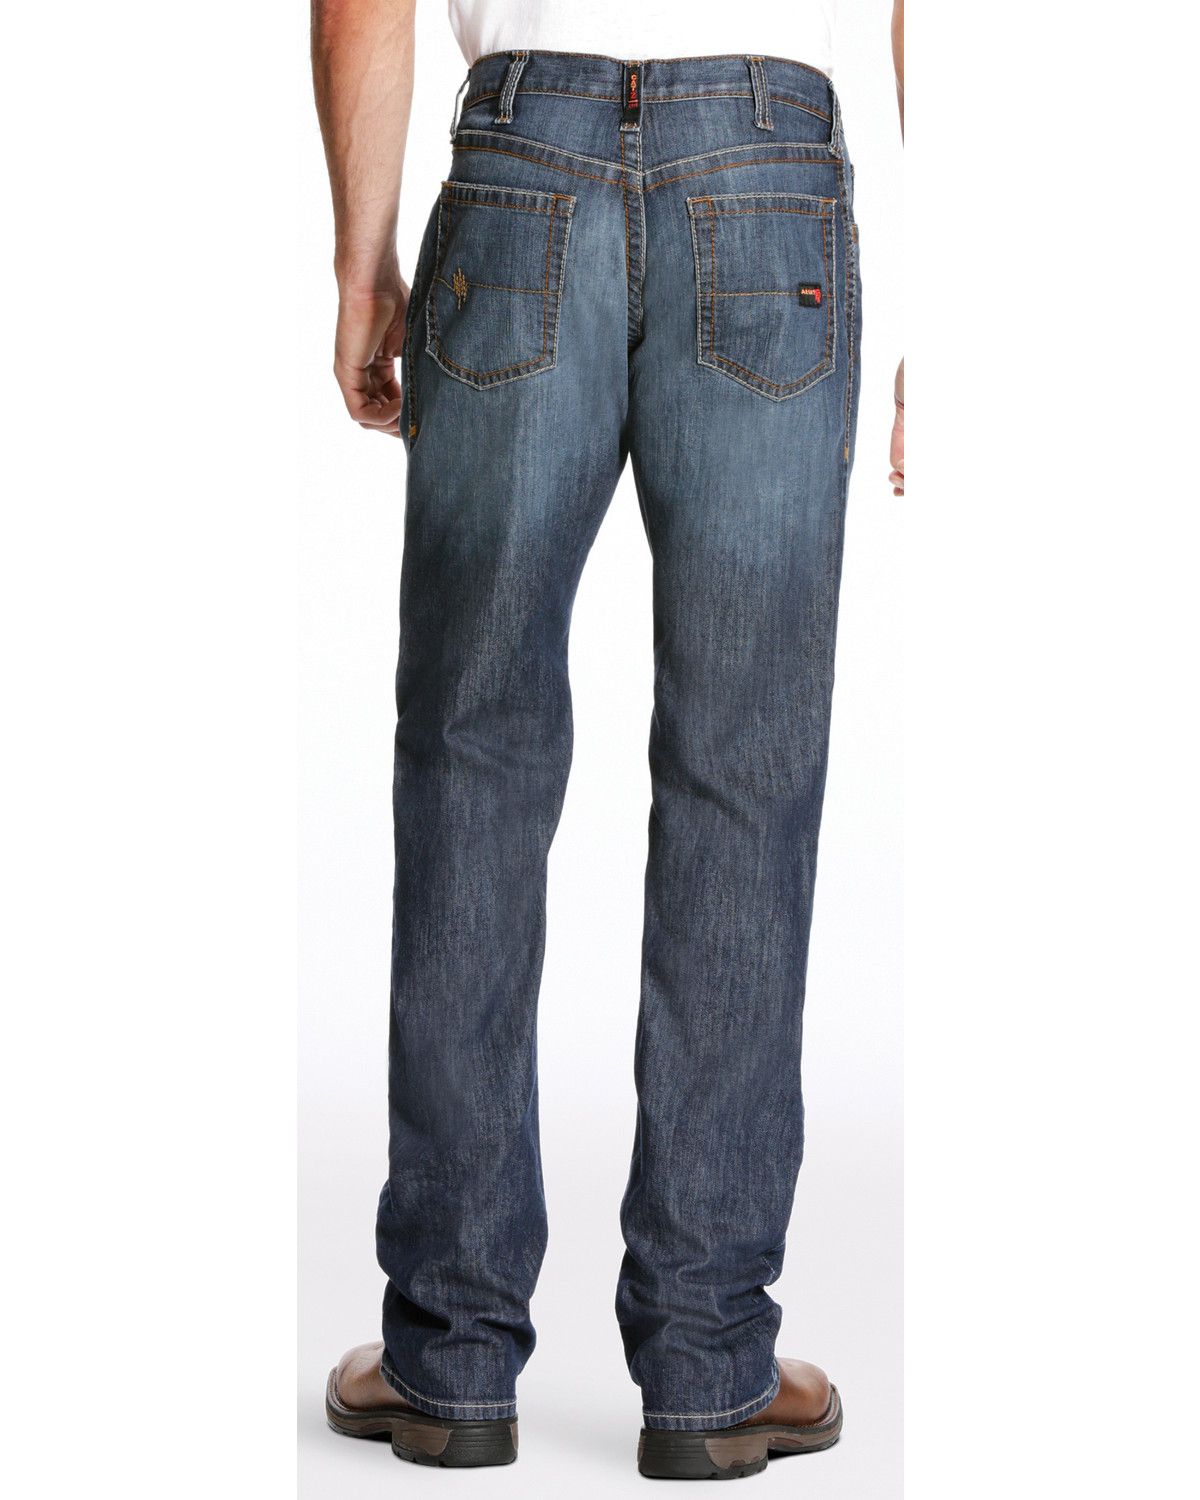 Ariat Men's FR M4 Inherent Basic Low Rise Bootcut Jeans